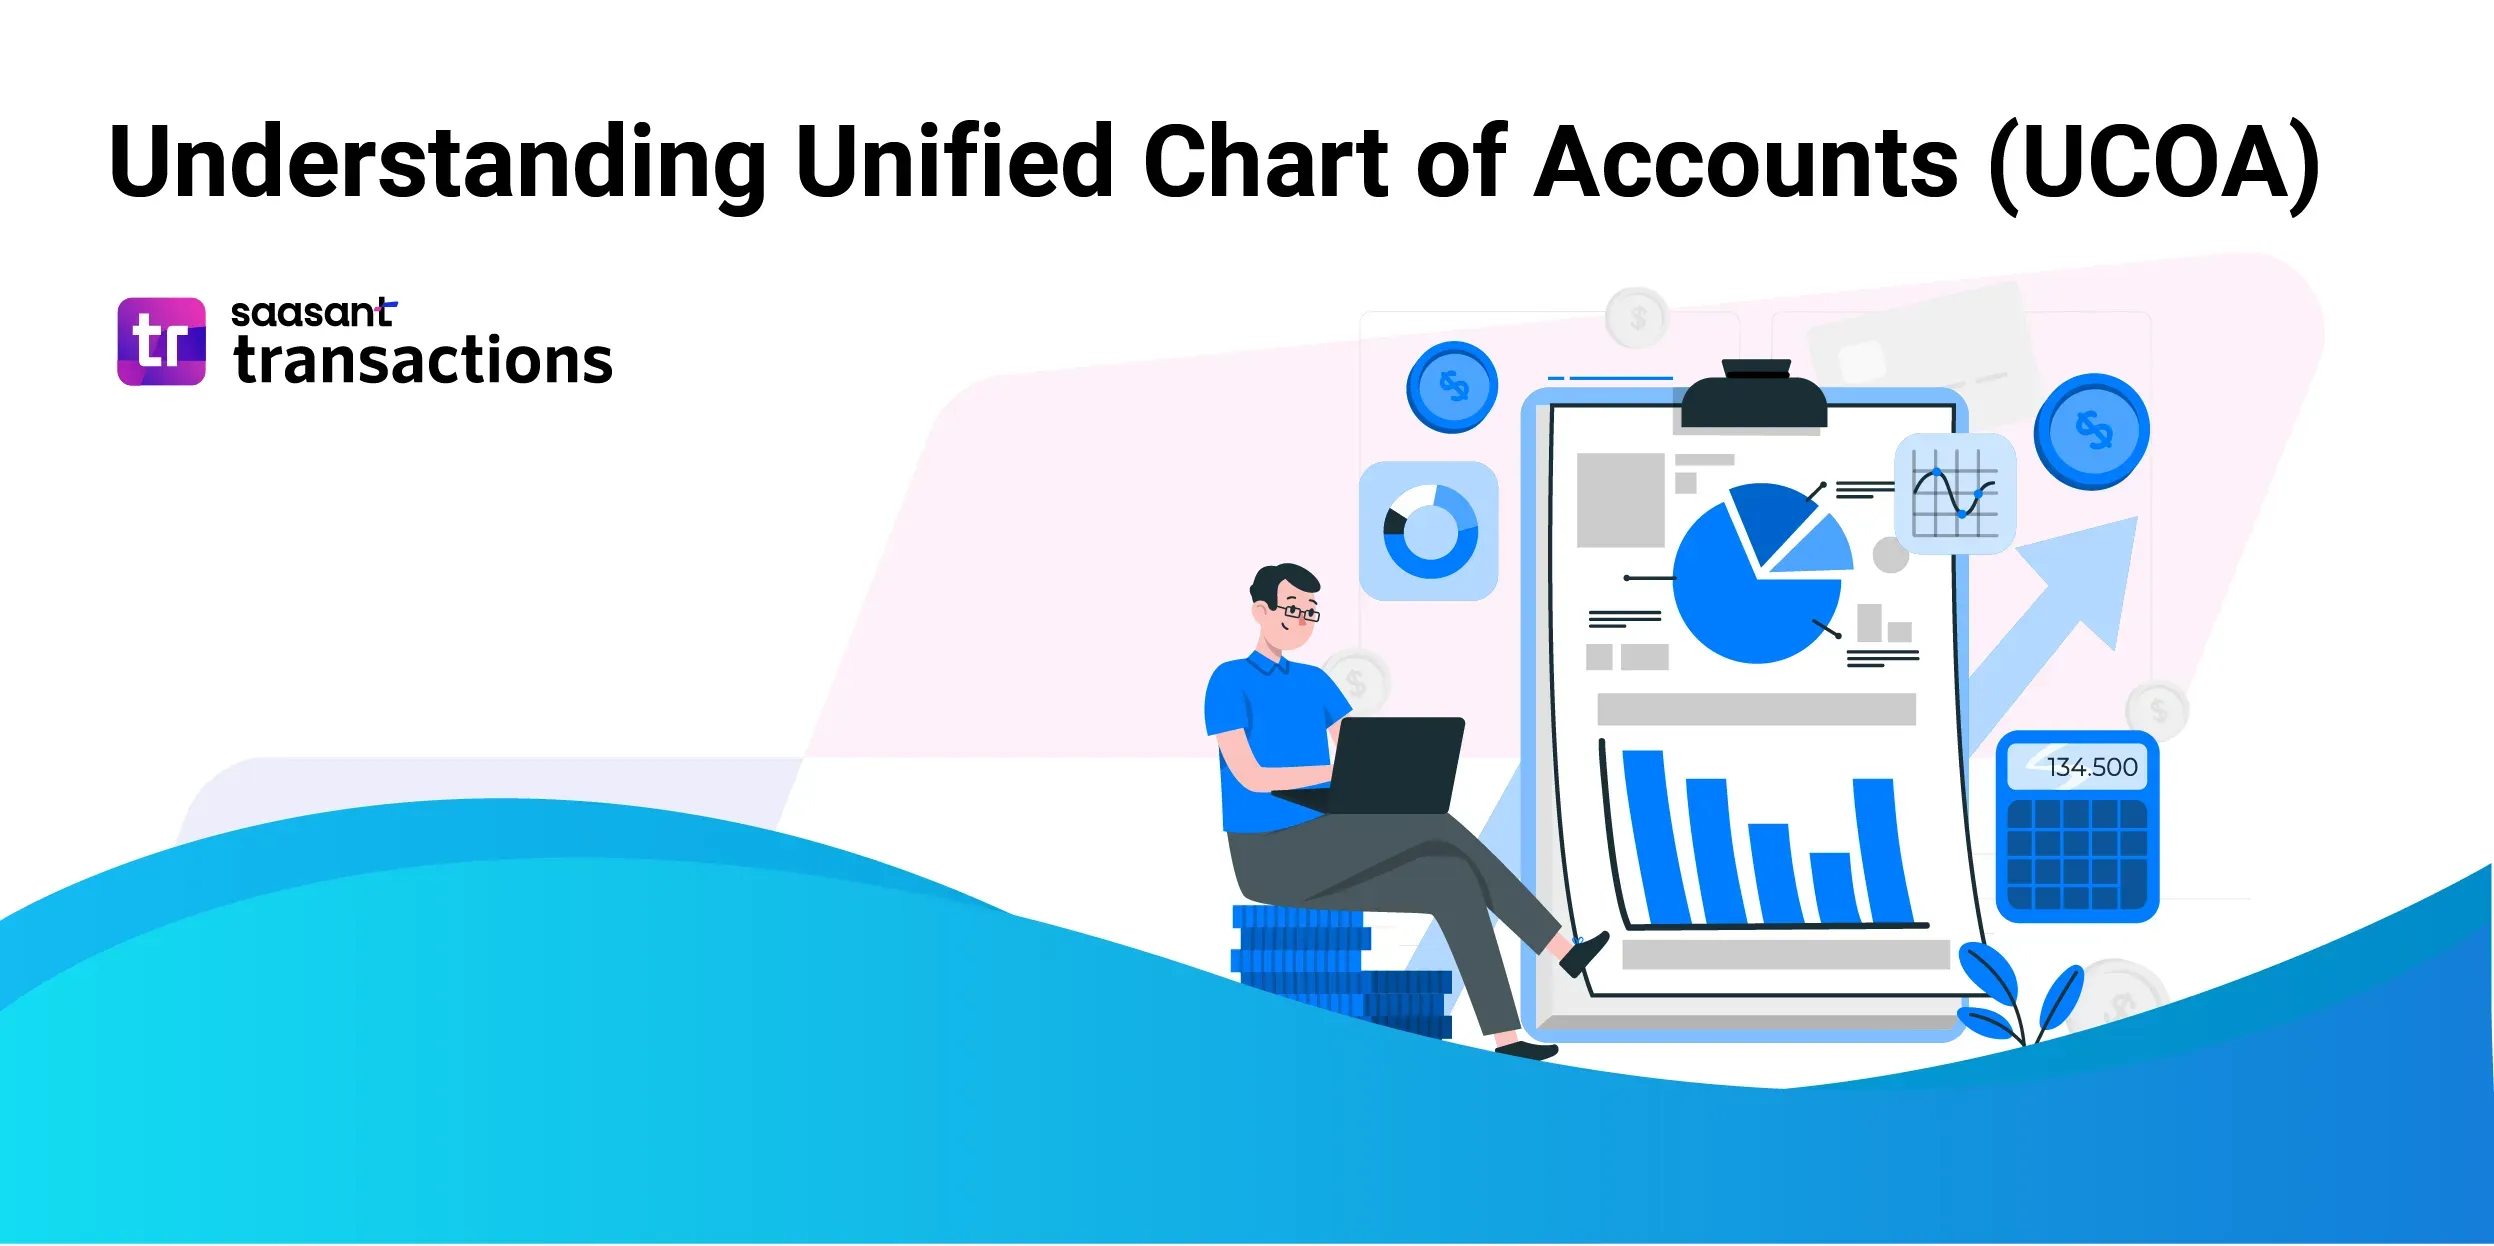 Understanding the Unified Chart of Accounts (UCOA)